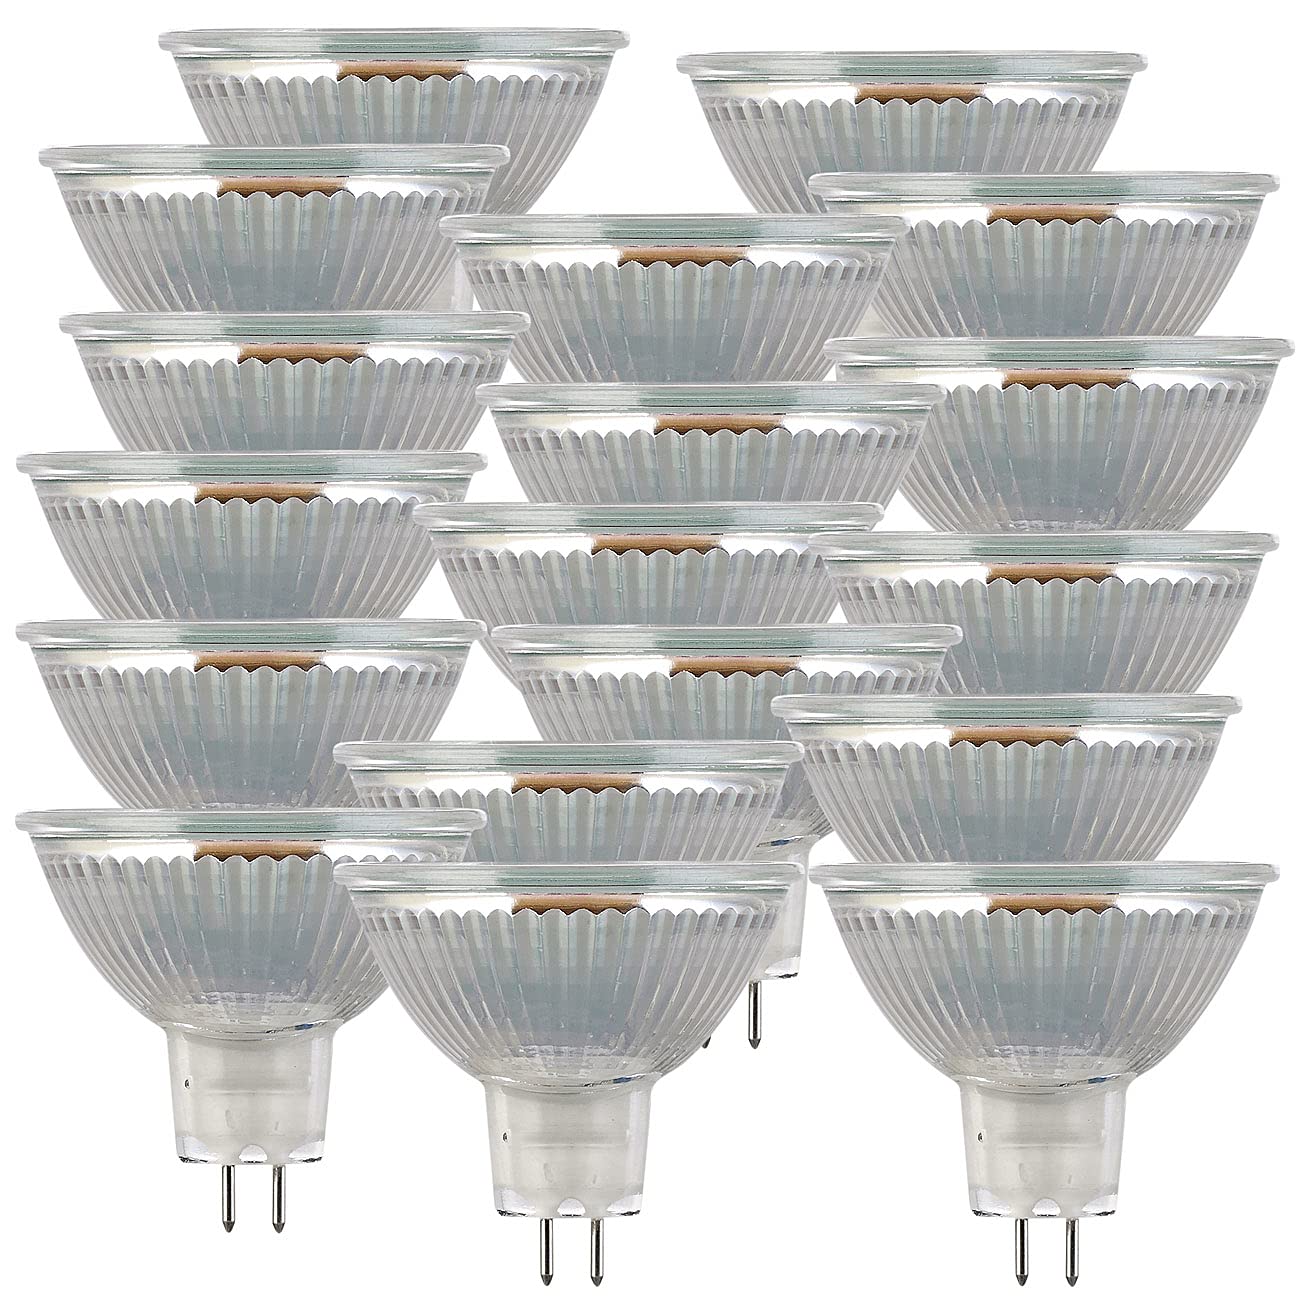 Luminea LED-Lampen Gu5.3: 18er-Set LED-Spots mit Glasgehäuse GU5.3, 3 W, 250 lm (LED-Leuchtmittel Gu5 3 230V, LED-Lampen Gu5.3 warmweiss, Deckenlampe)